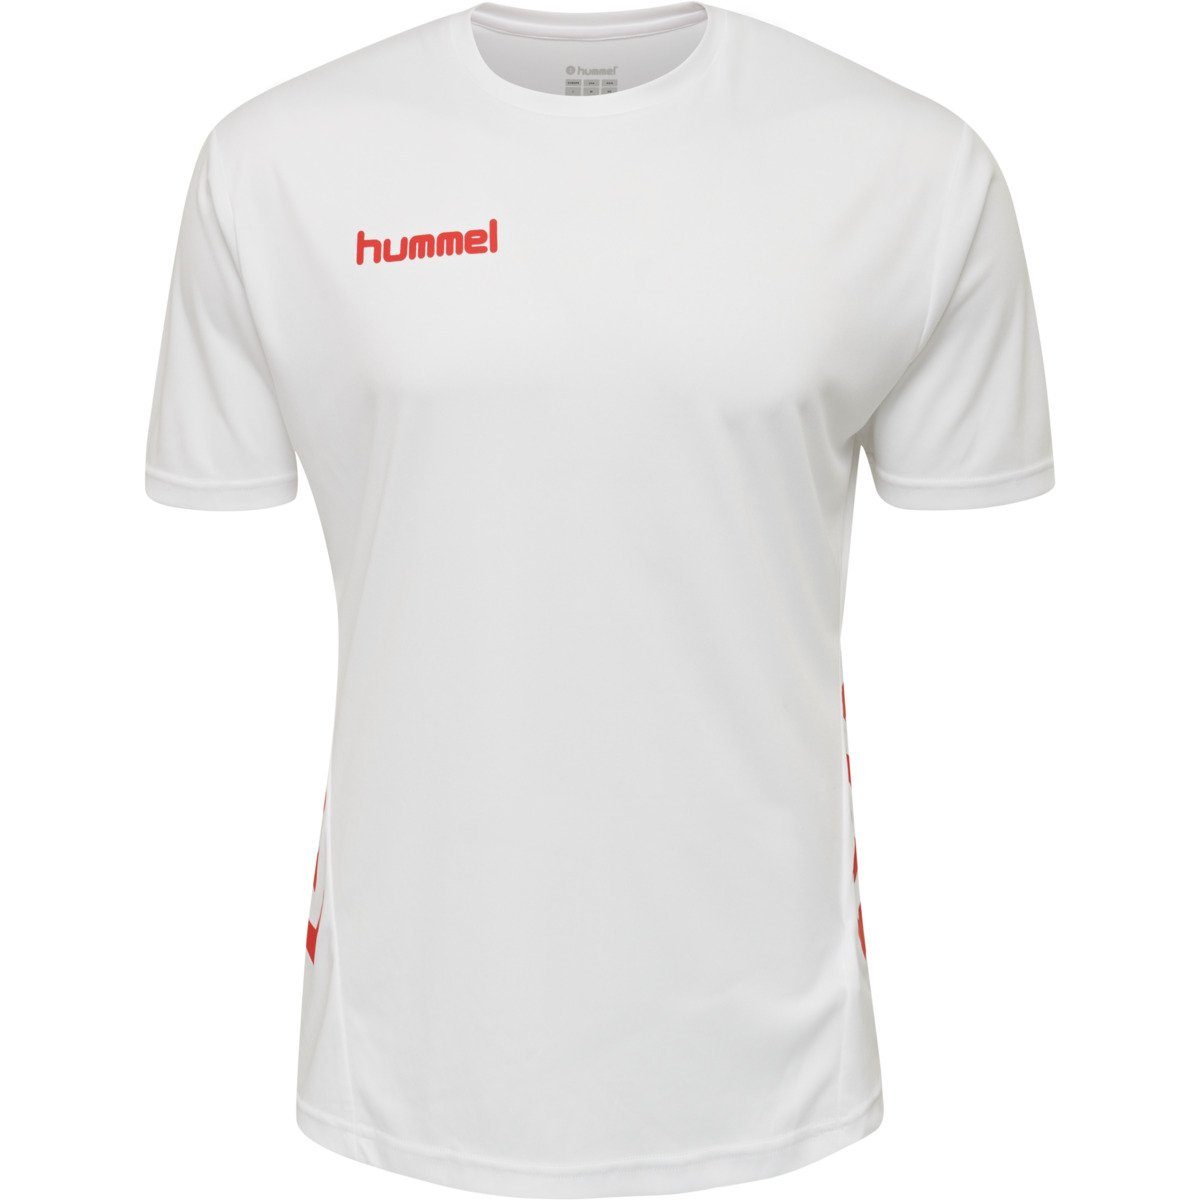 Promo T-Shirt 1x Duo (Duo RED WHITE/TRUE Set, 1x Jr. Trikot) hummel Trikotset Short